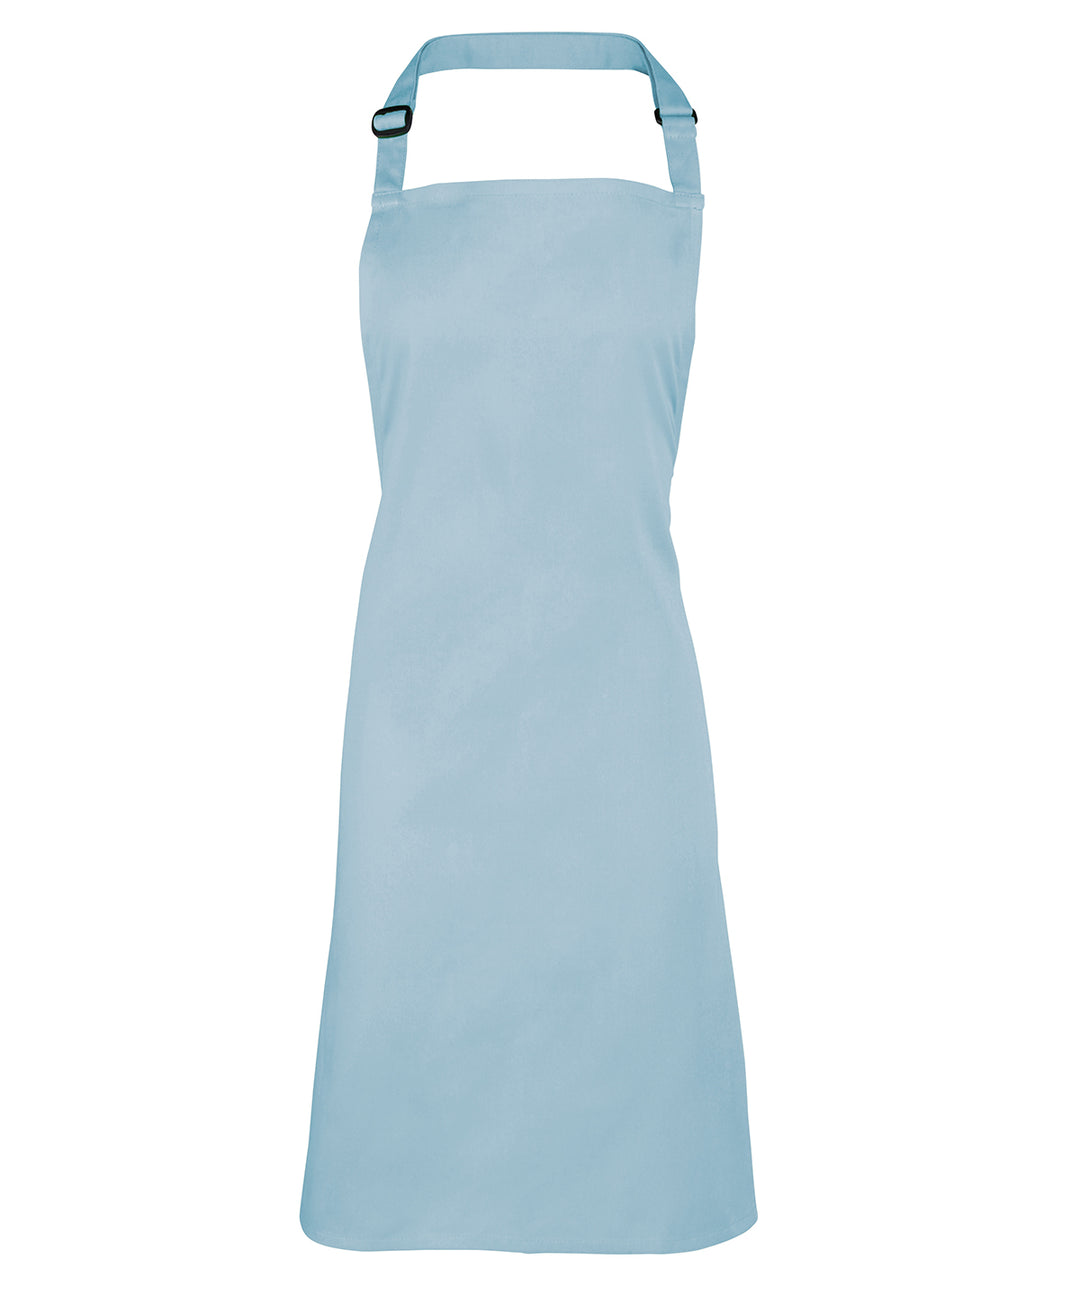 a light blue apron on a white background